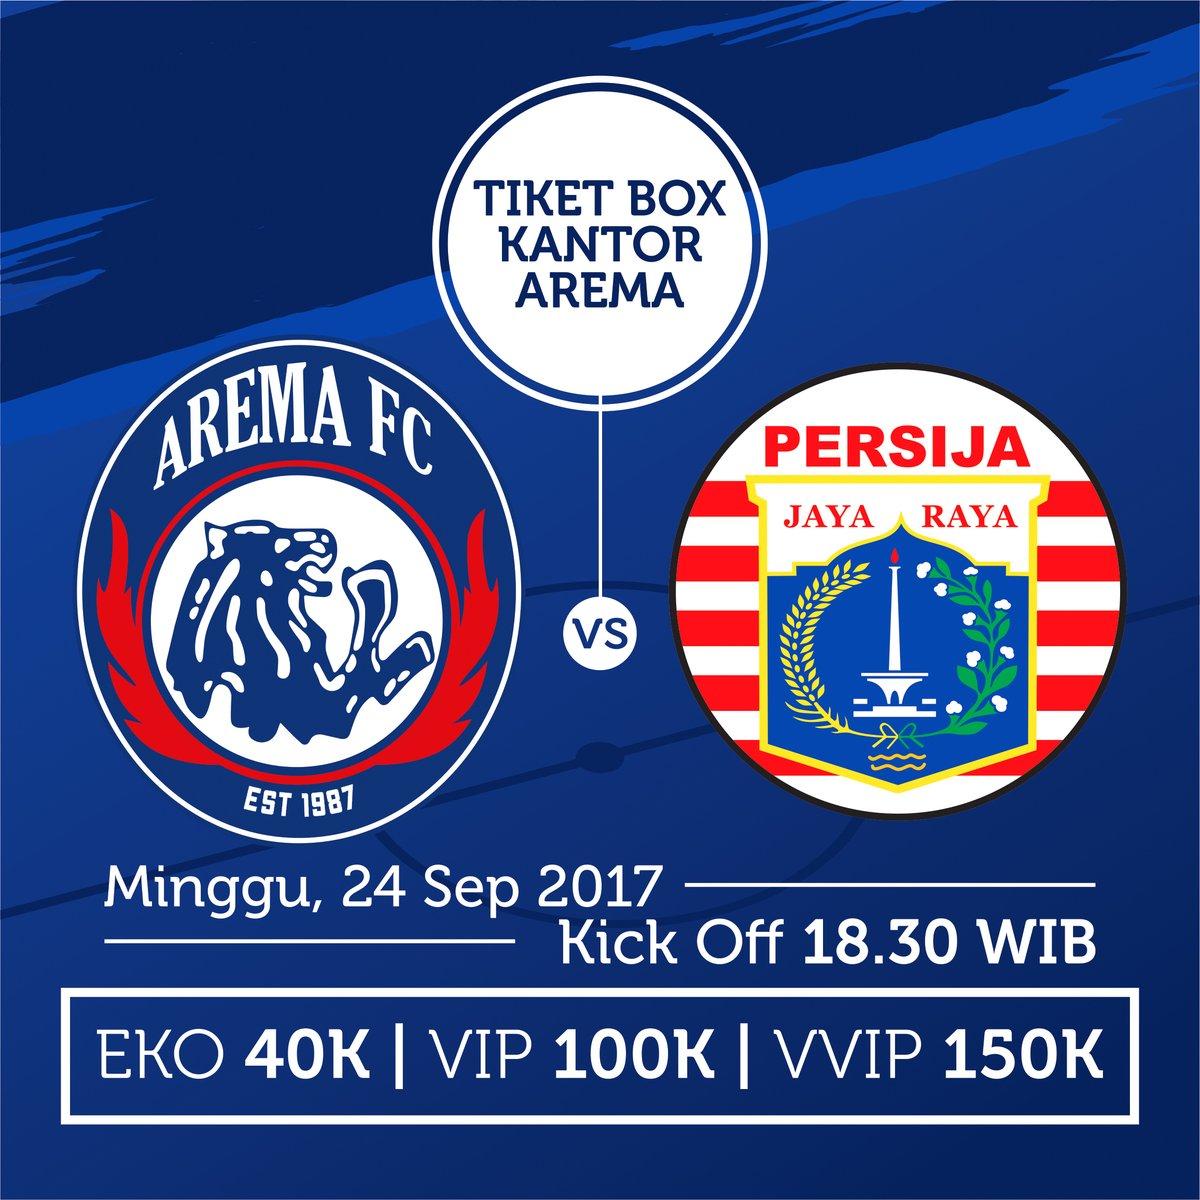 Harga tiket Arema FC vs Persija Jakarta. Copyright: Arema FC